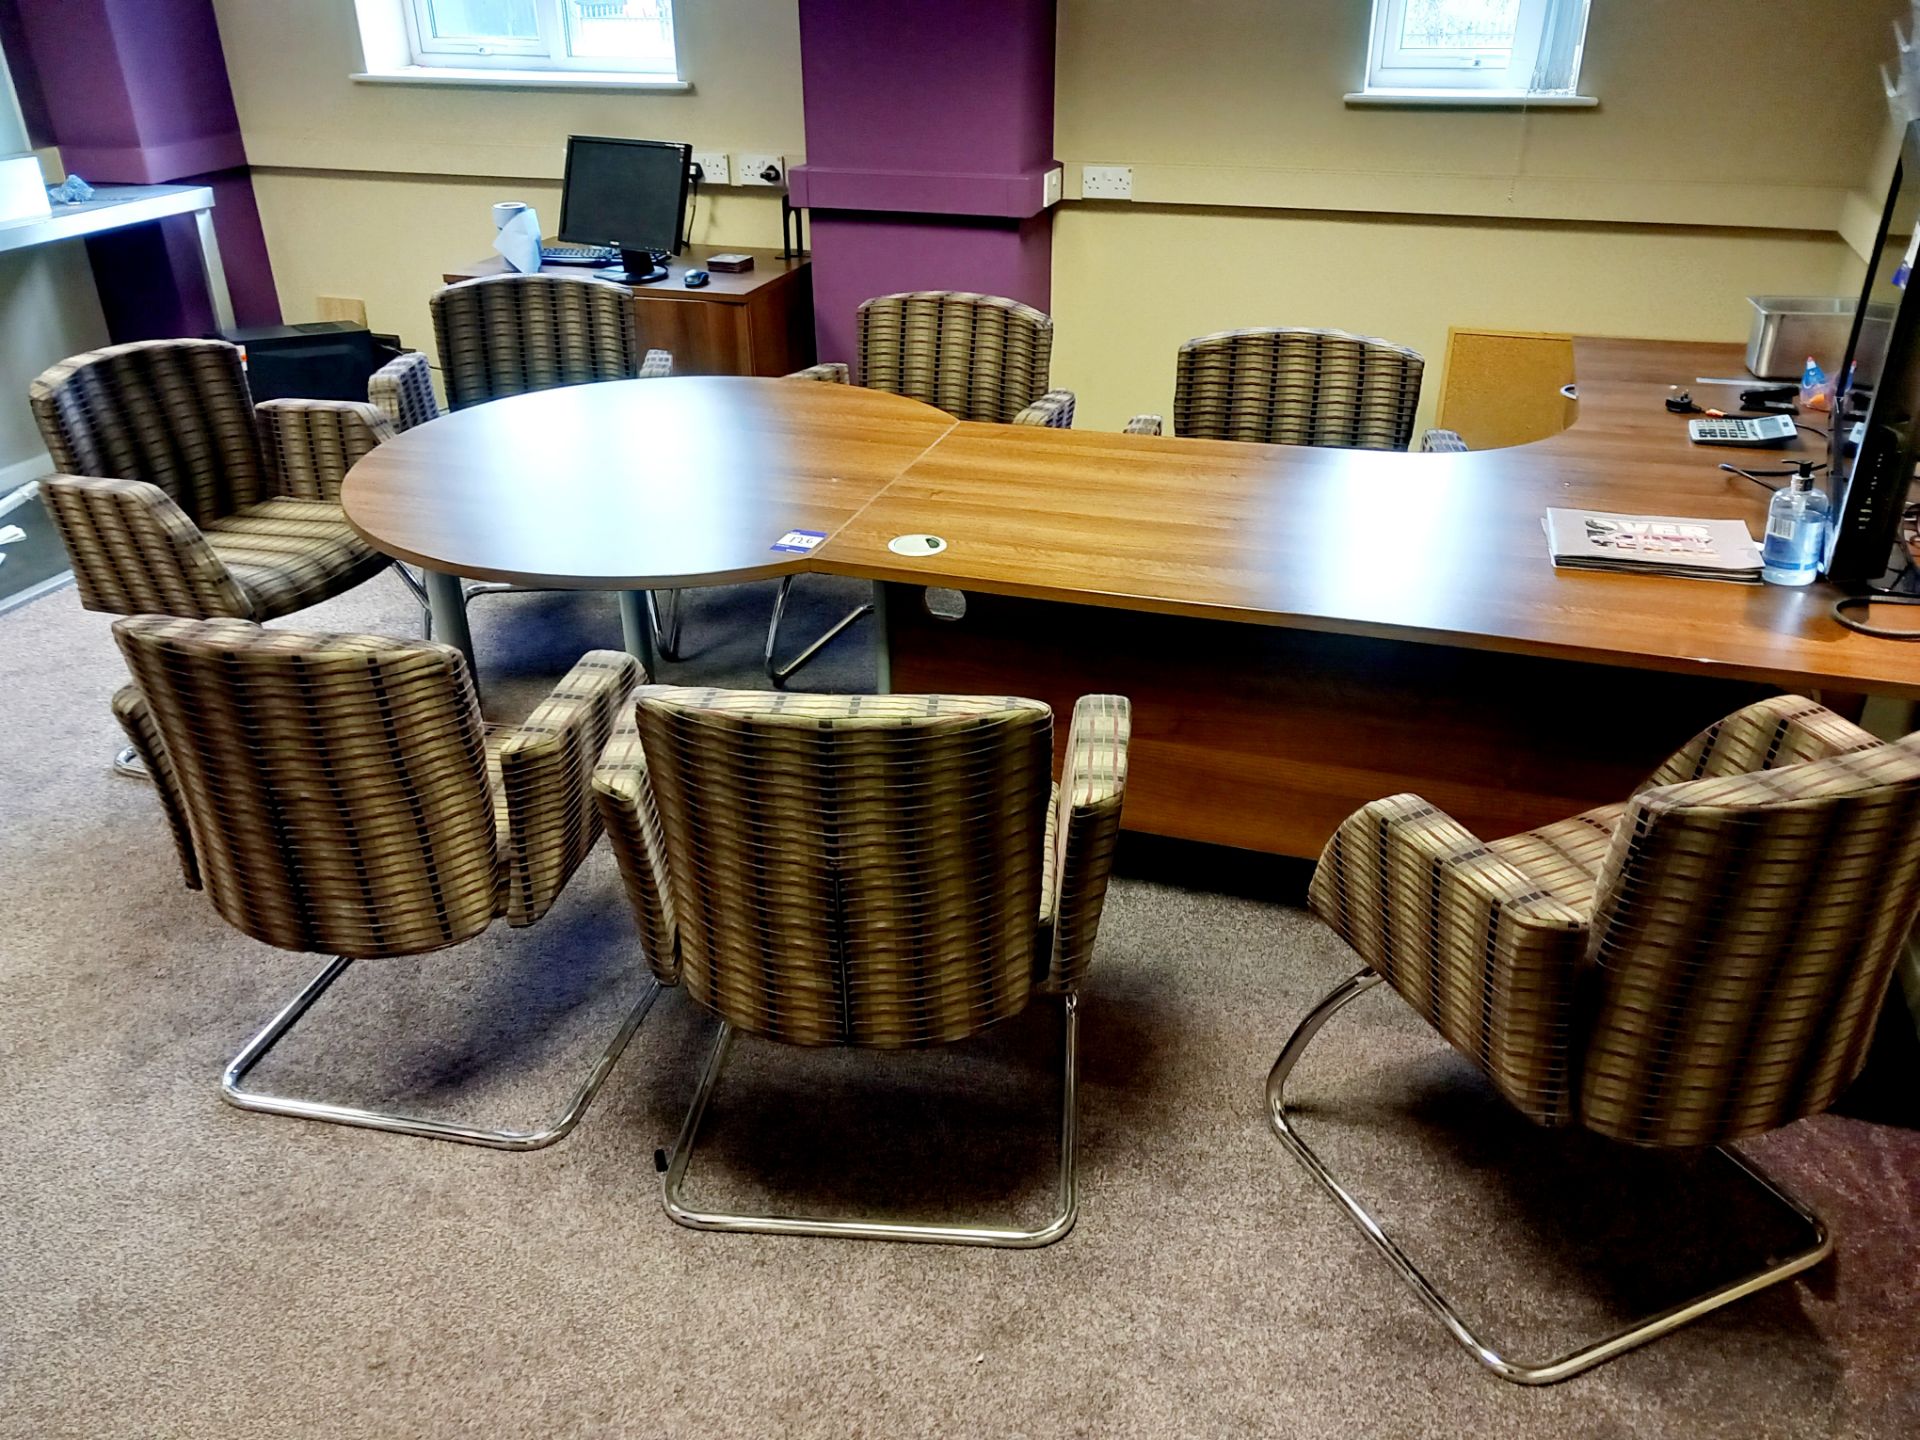 Office furniture to include oak effect cantilever corner desk, circular extension, 7 x boardroom